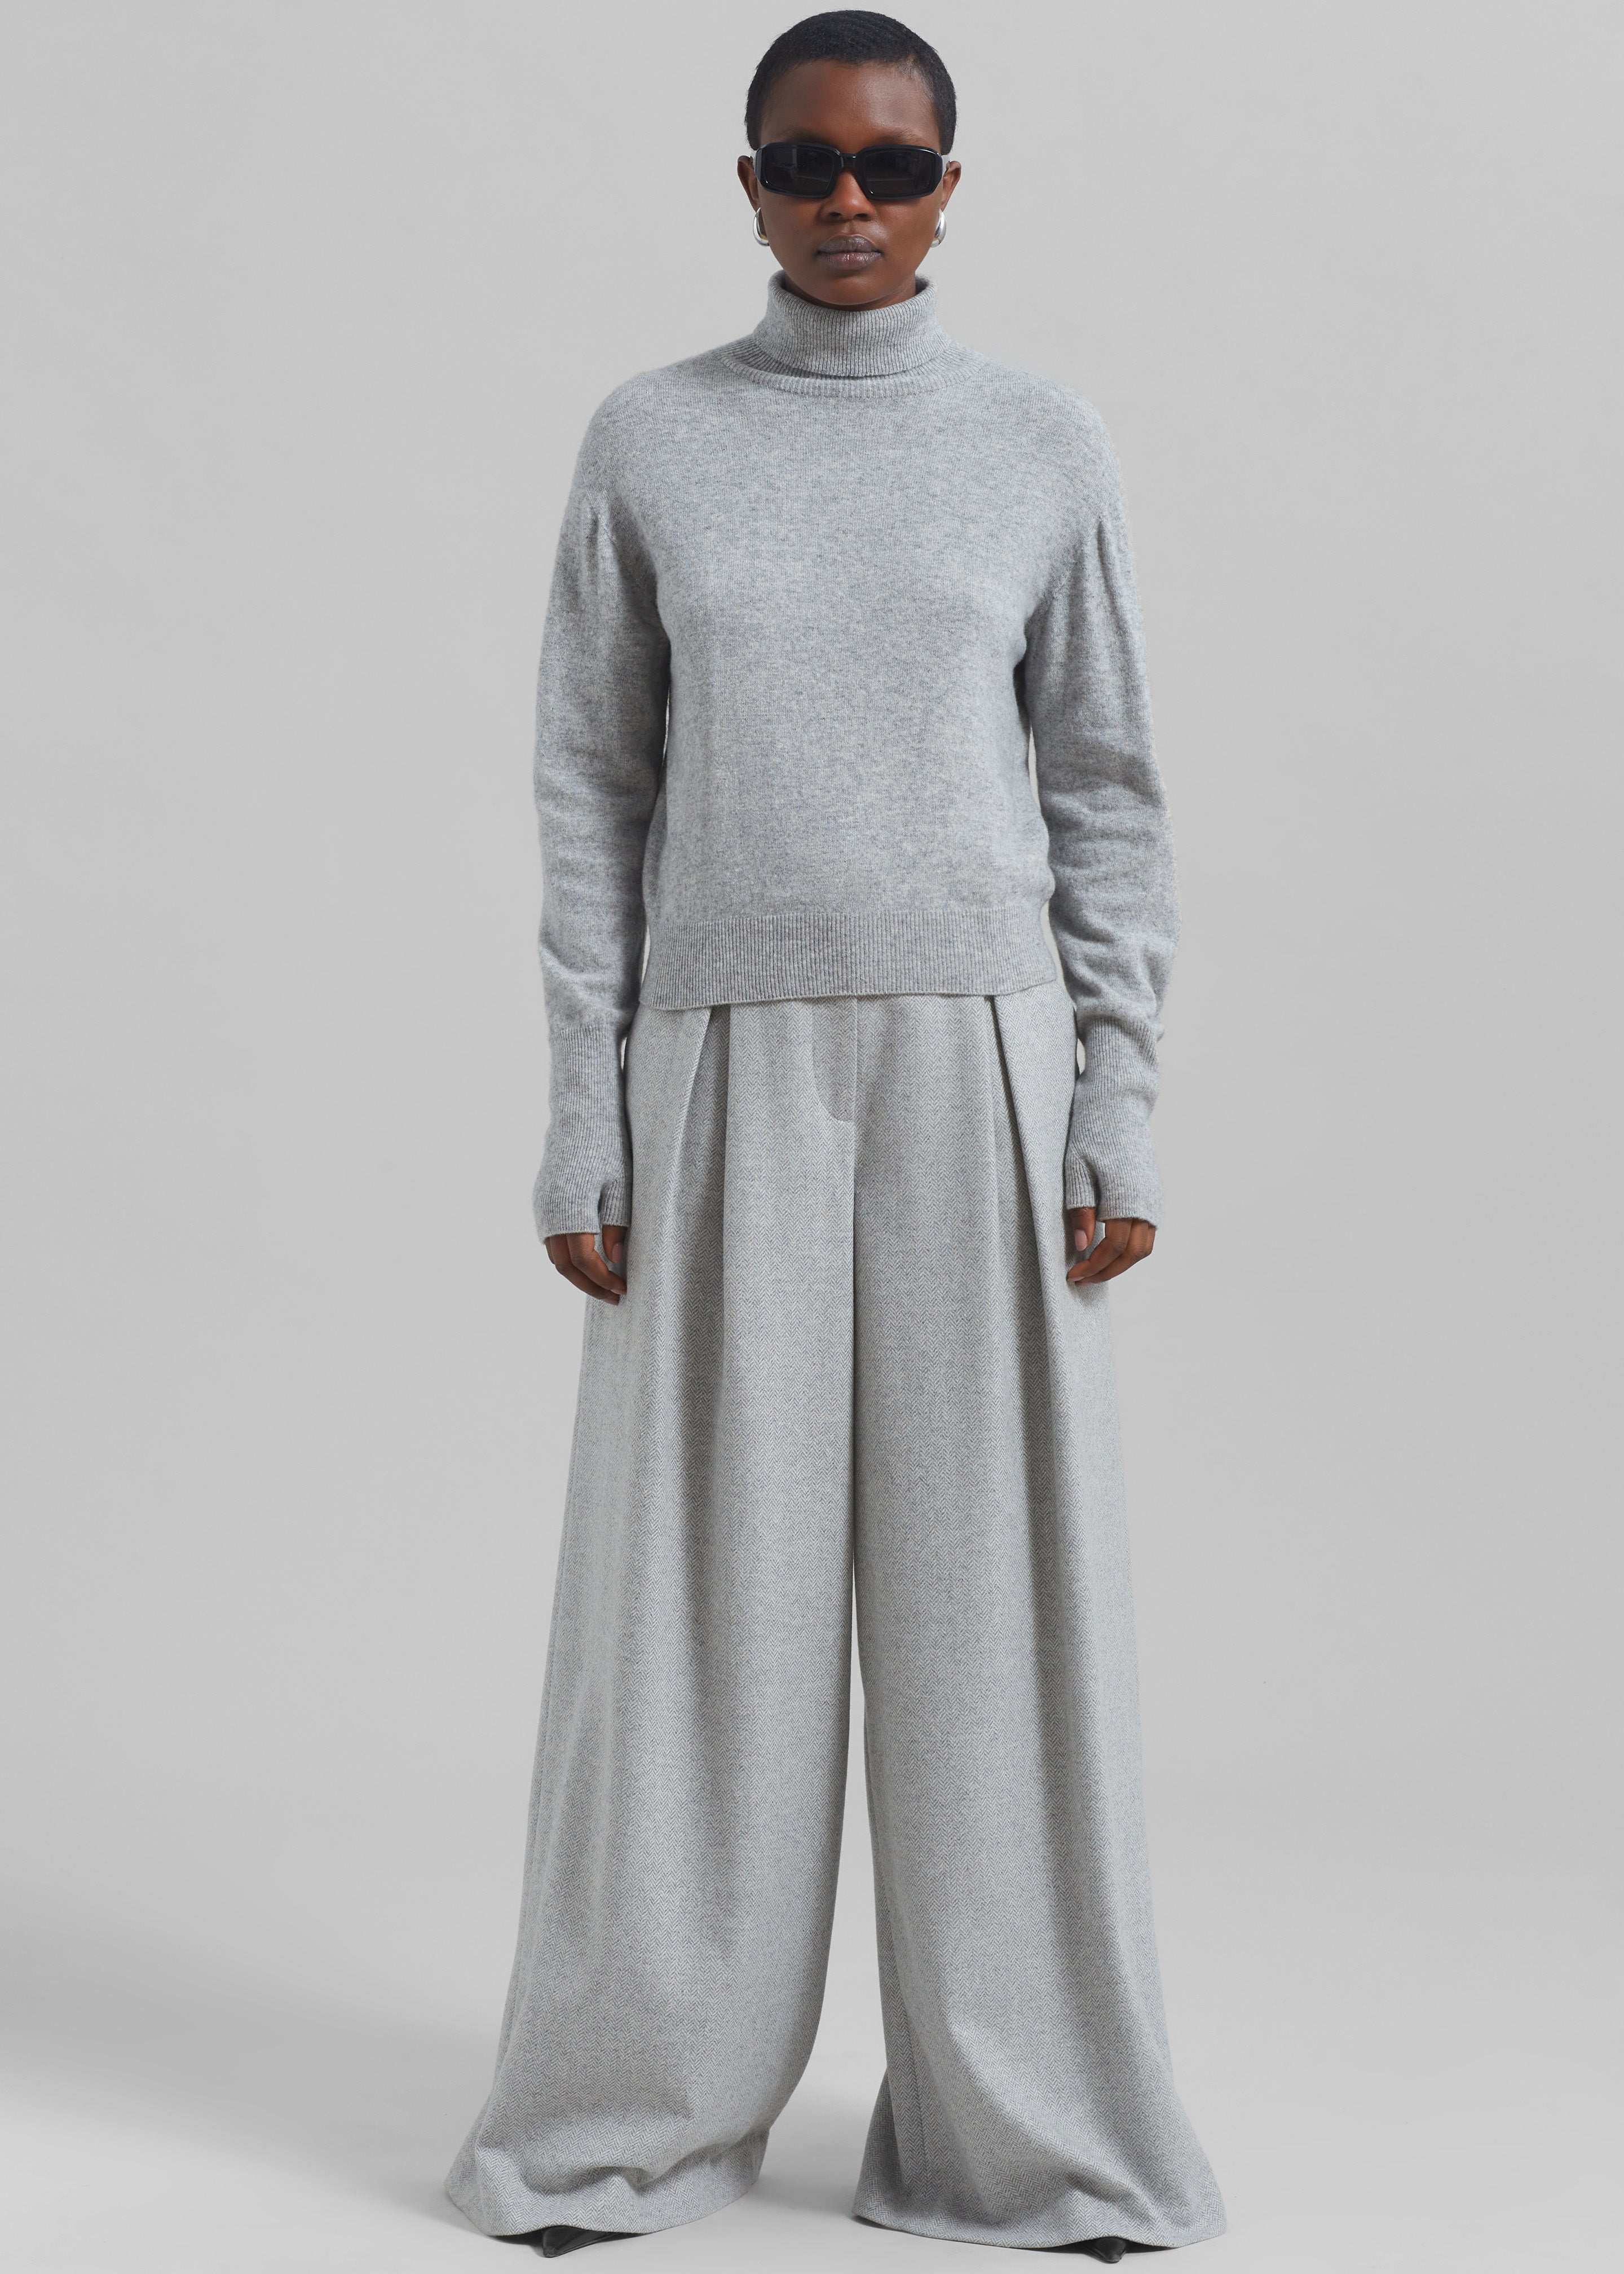 The Garment Trento Pants - Heather Grey Herringbone - 4